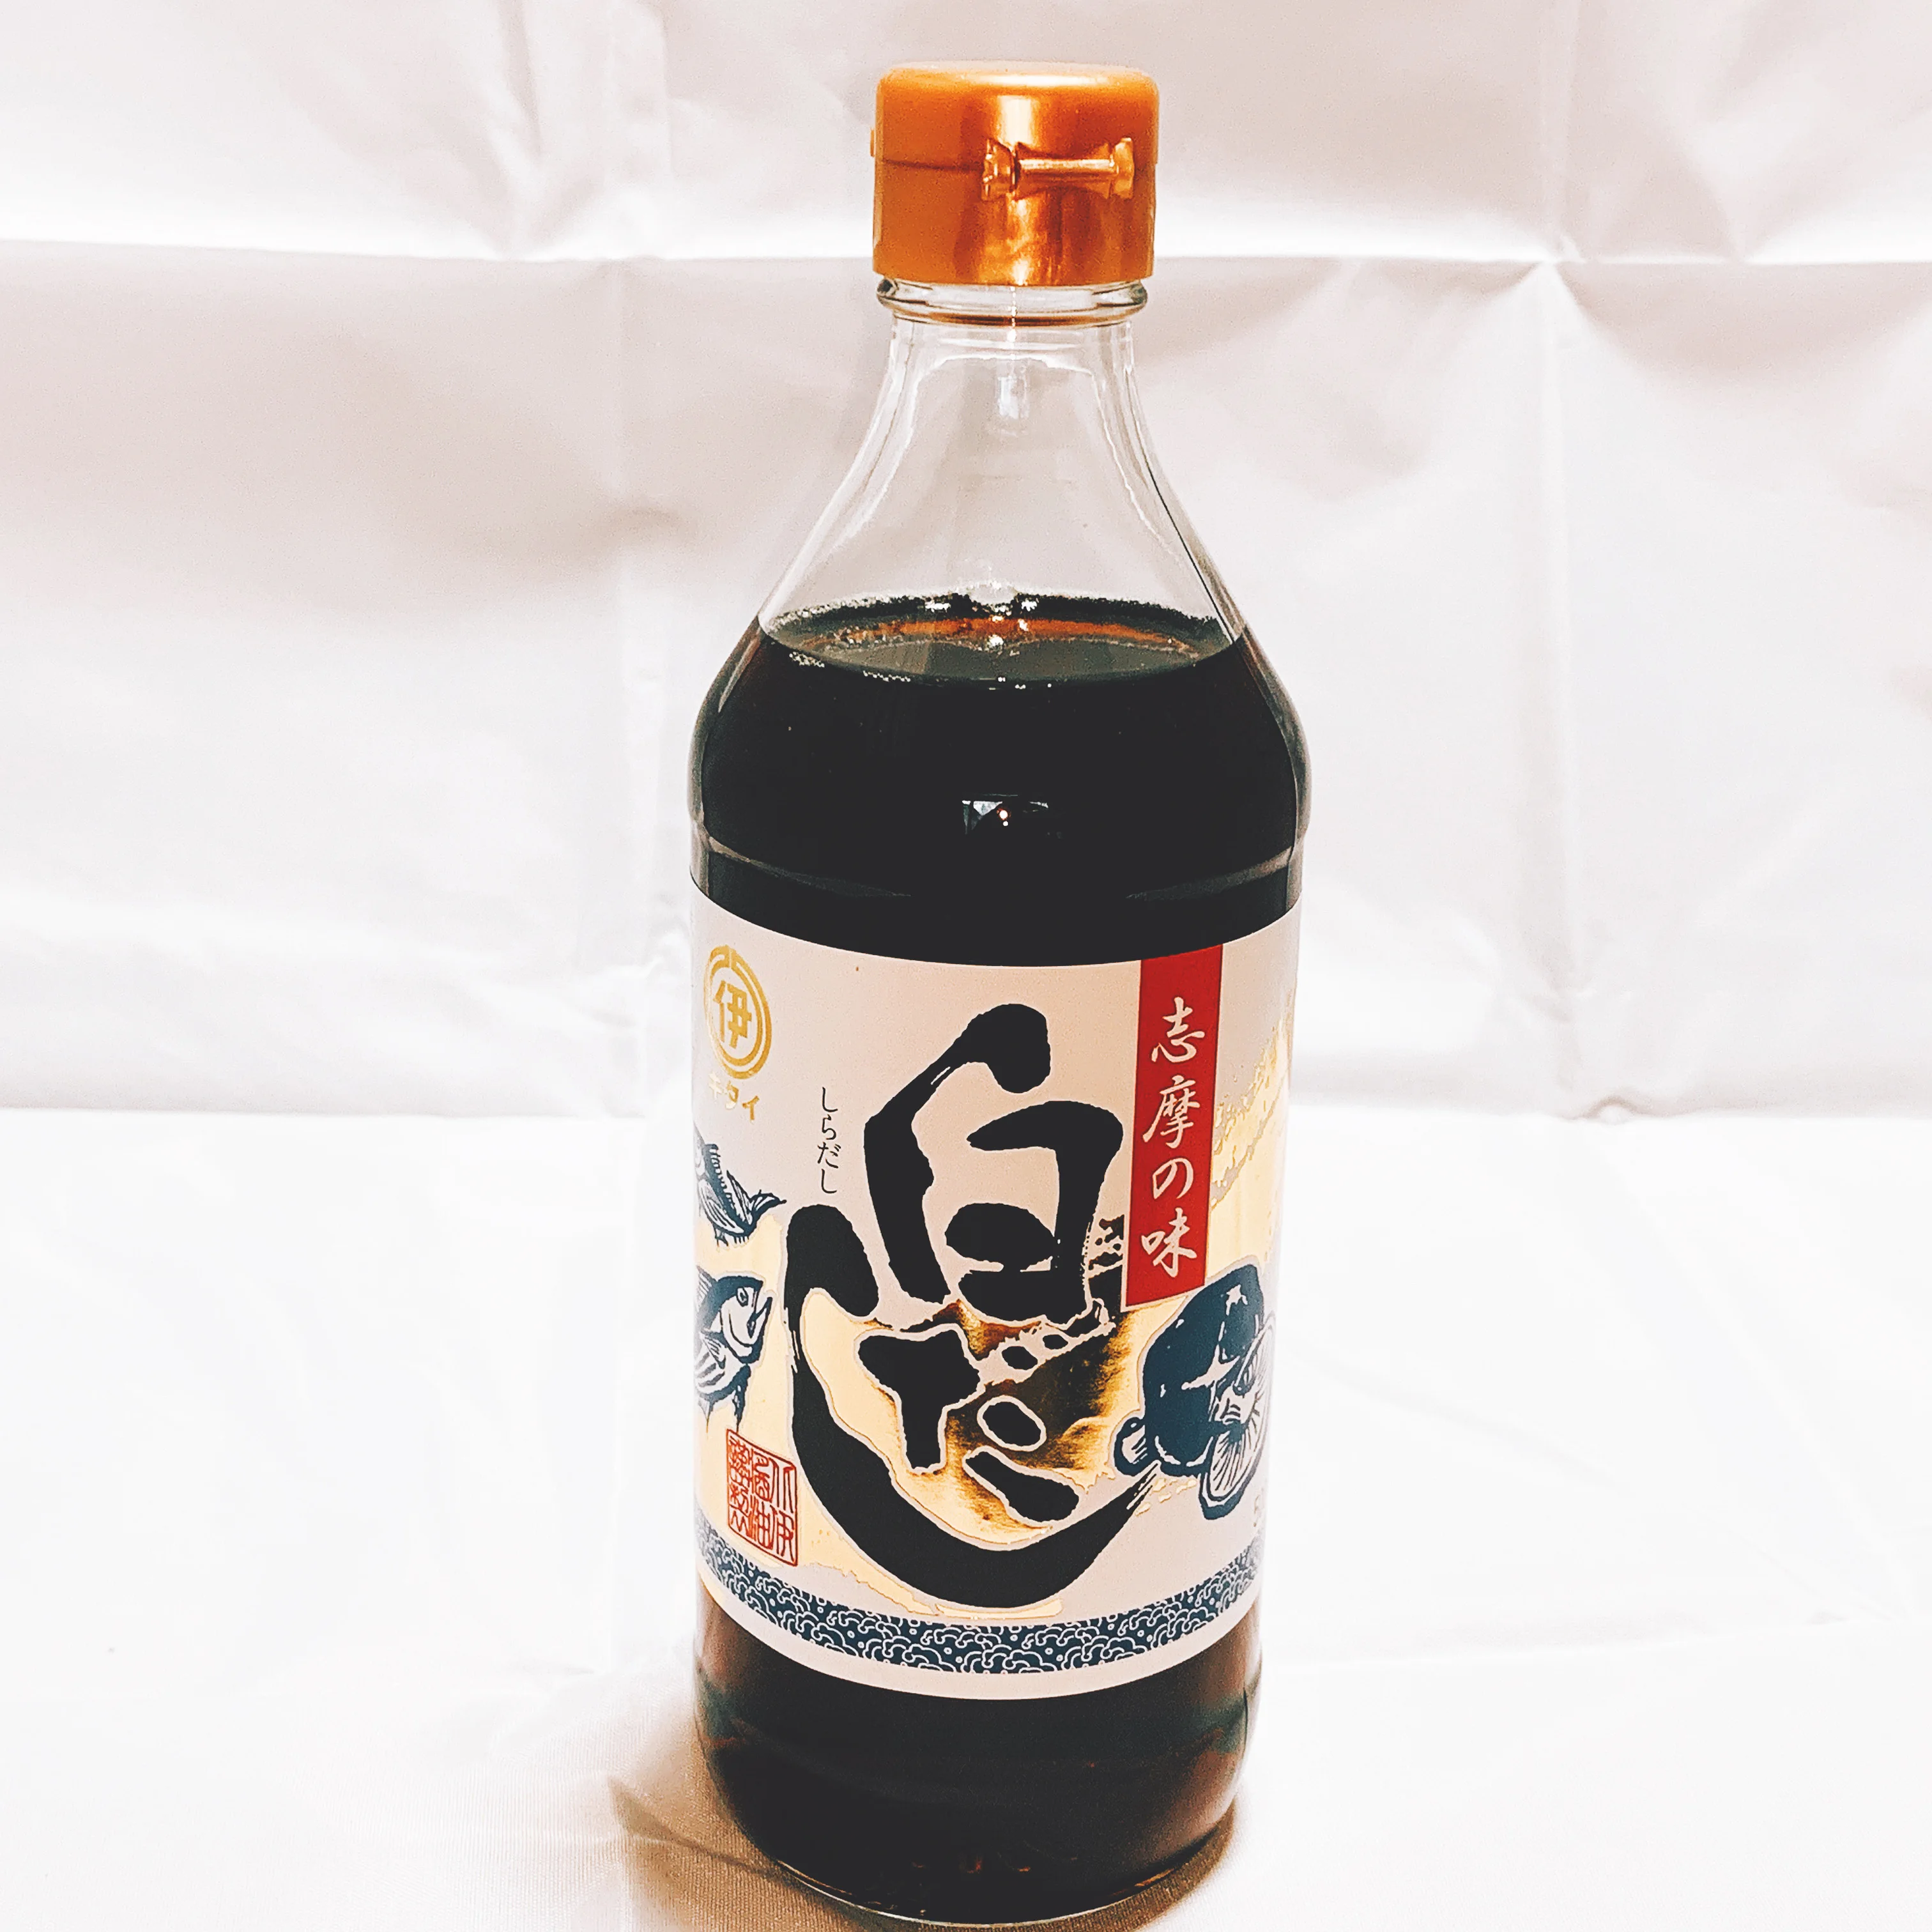 soup rich aroma Shiradashi Japanese Dashi stock soy sauce fish bottle (62423424407)